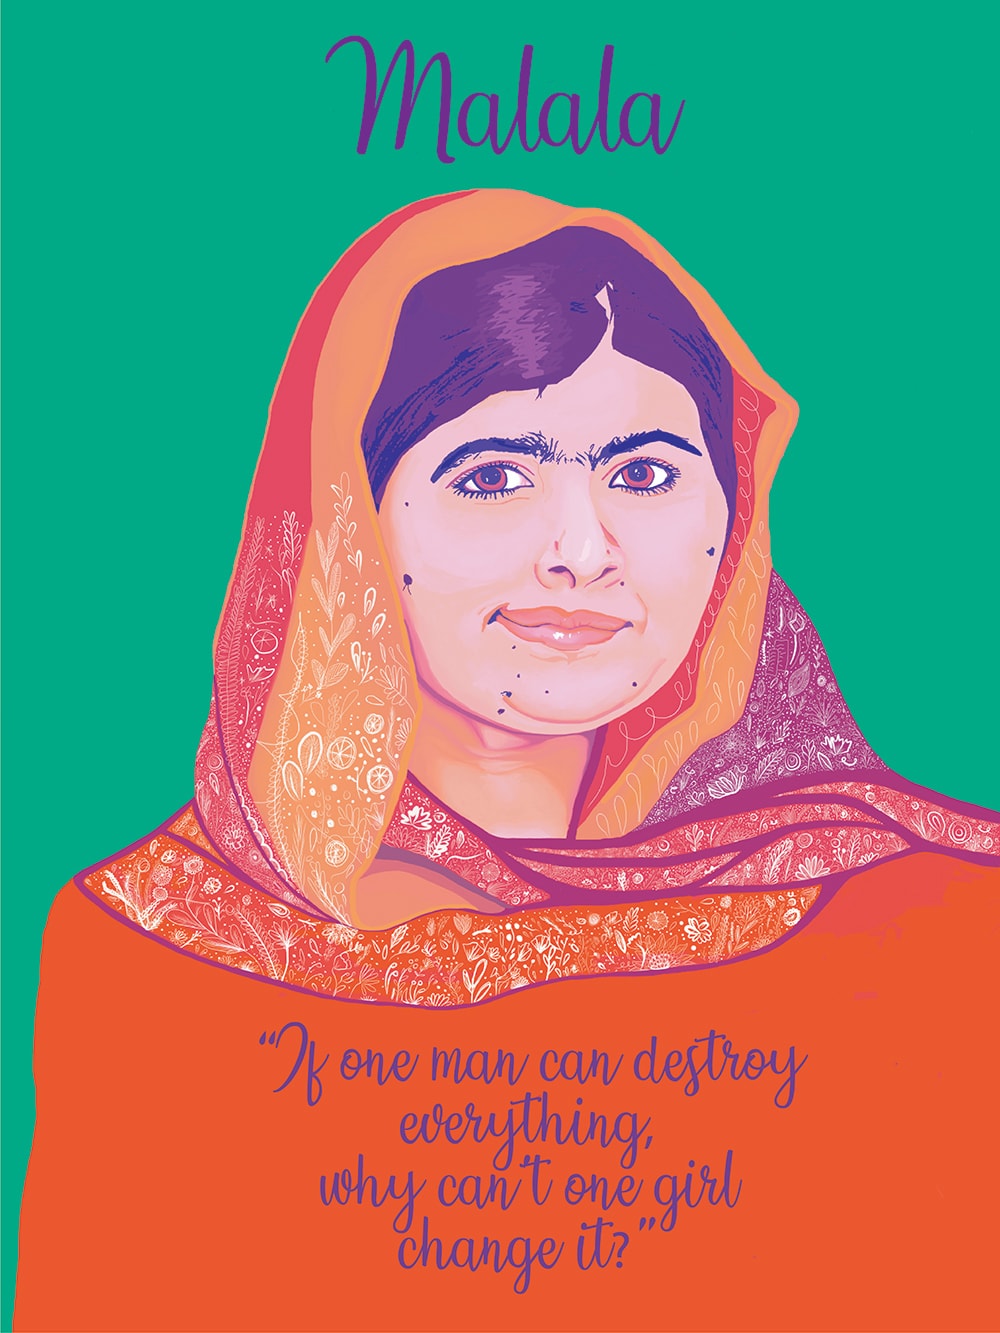 Malala illustration